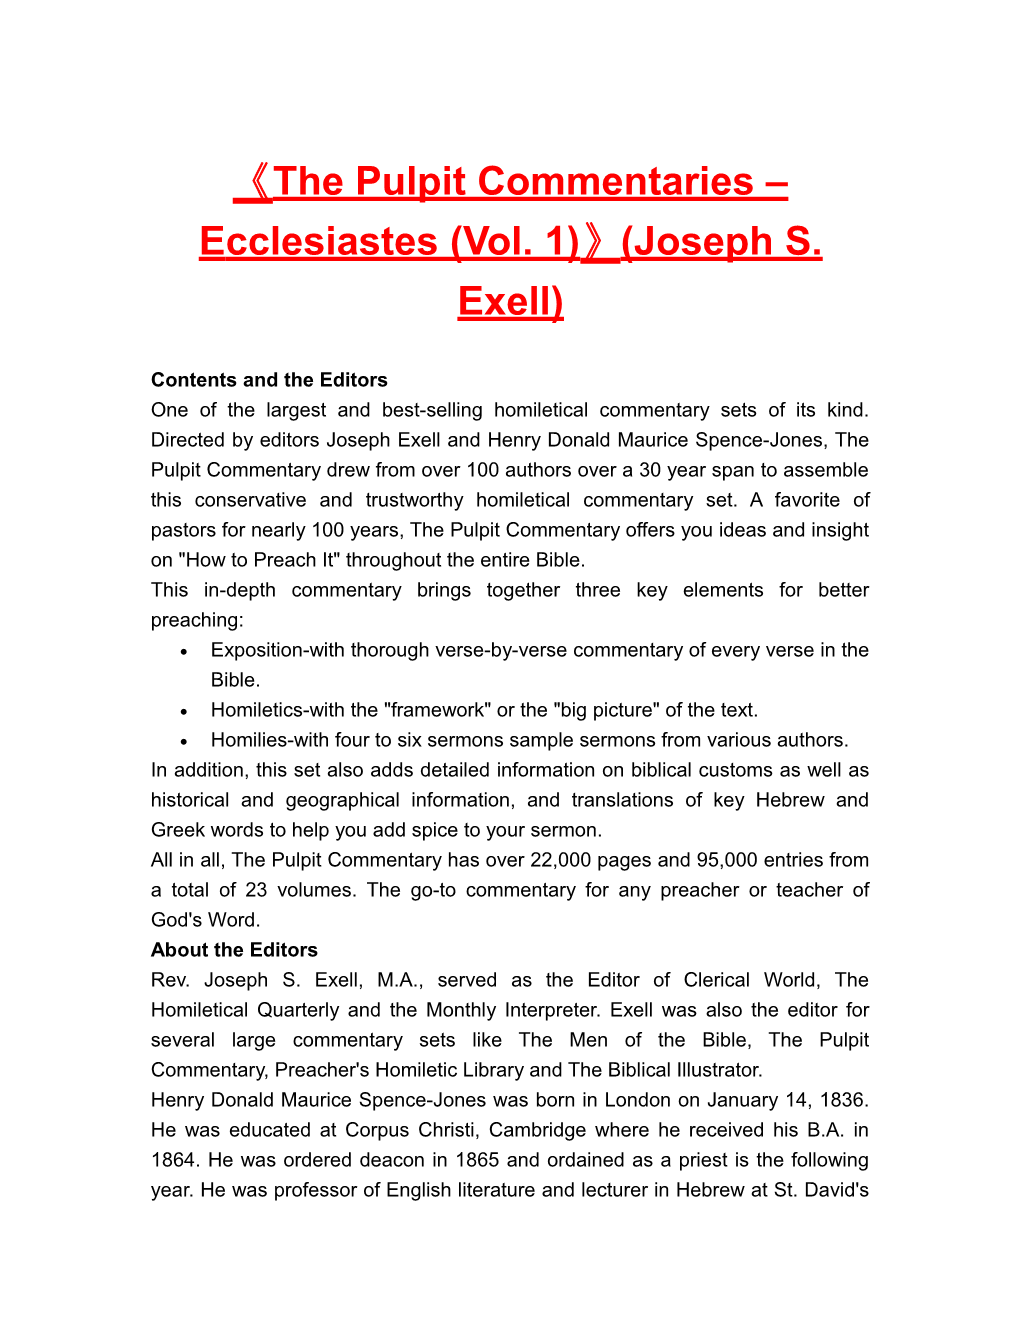 The Pulpit Commentaries Ecclesiastes (Vol. 1) (Joseph S. Exell)